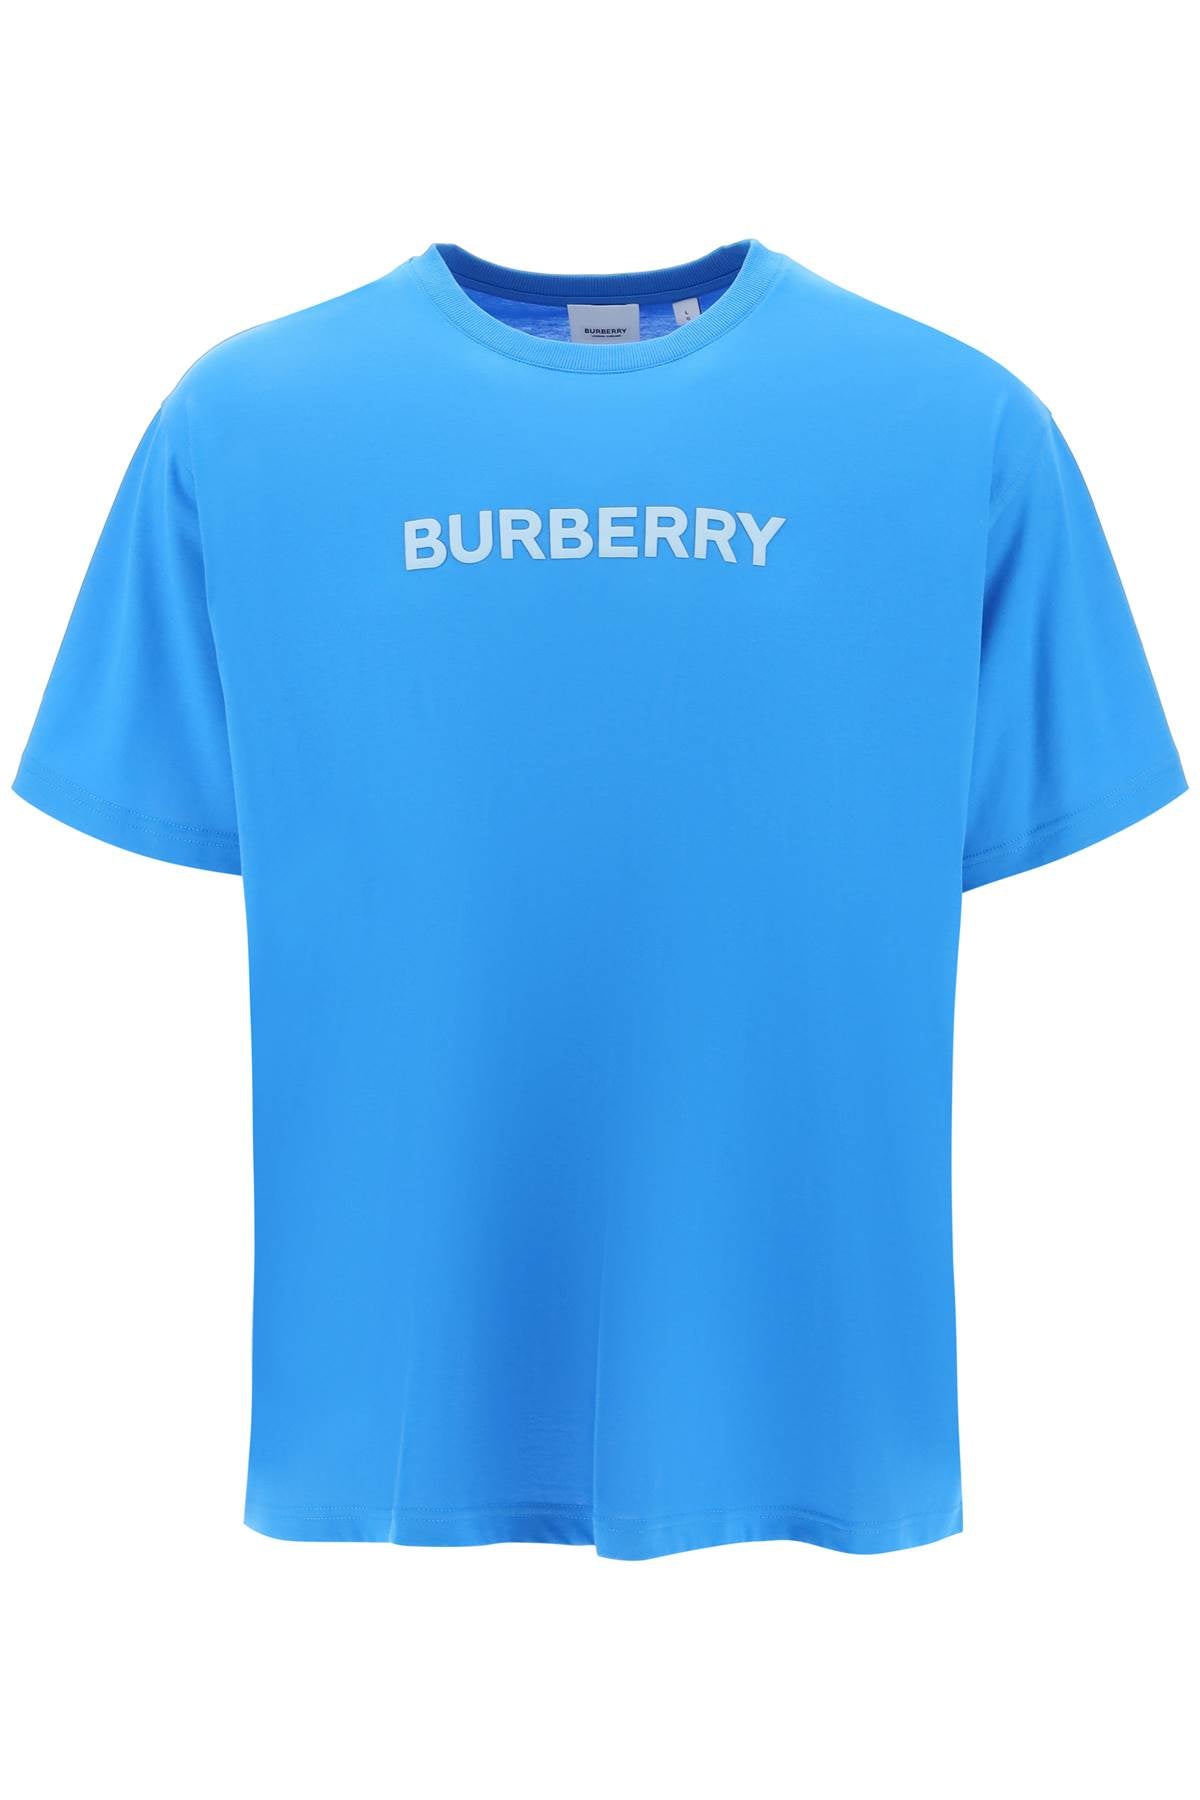 Burberry logo print t-shirt